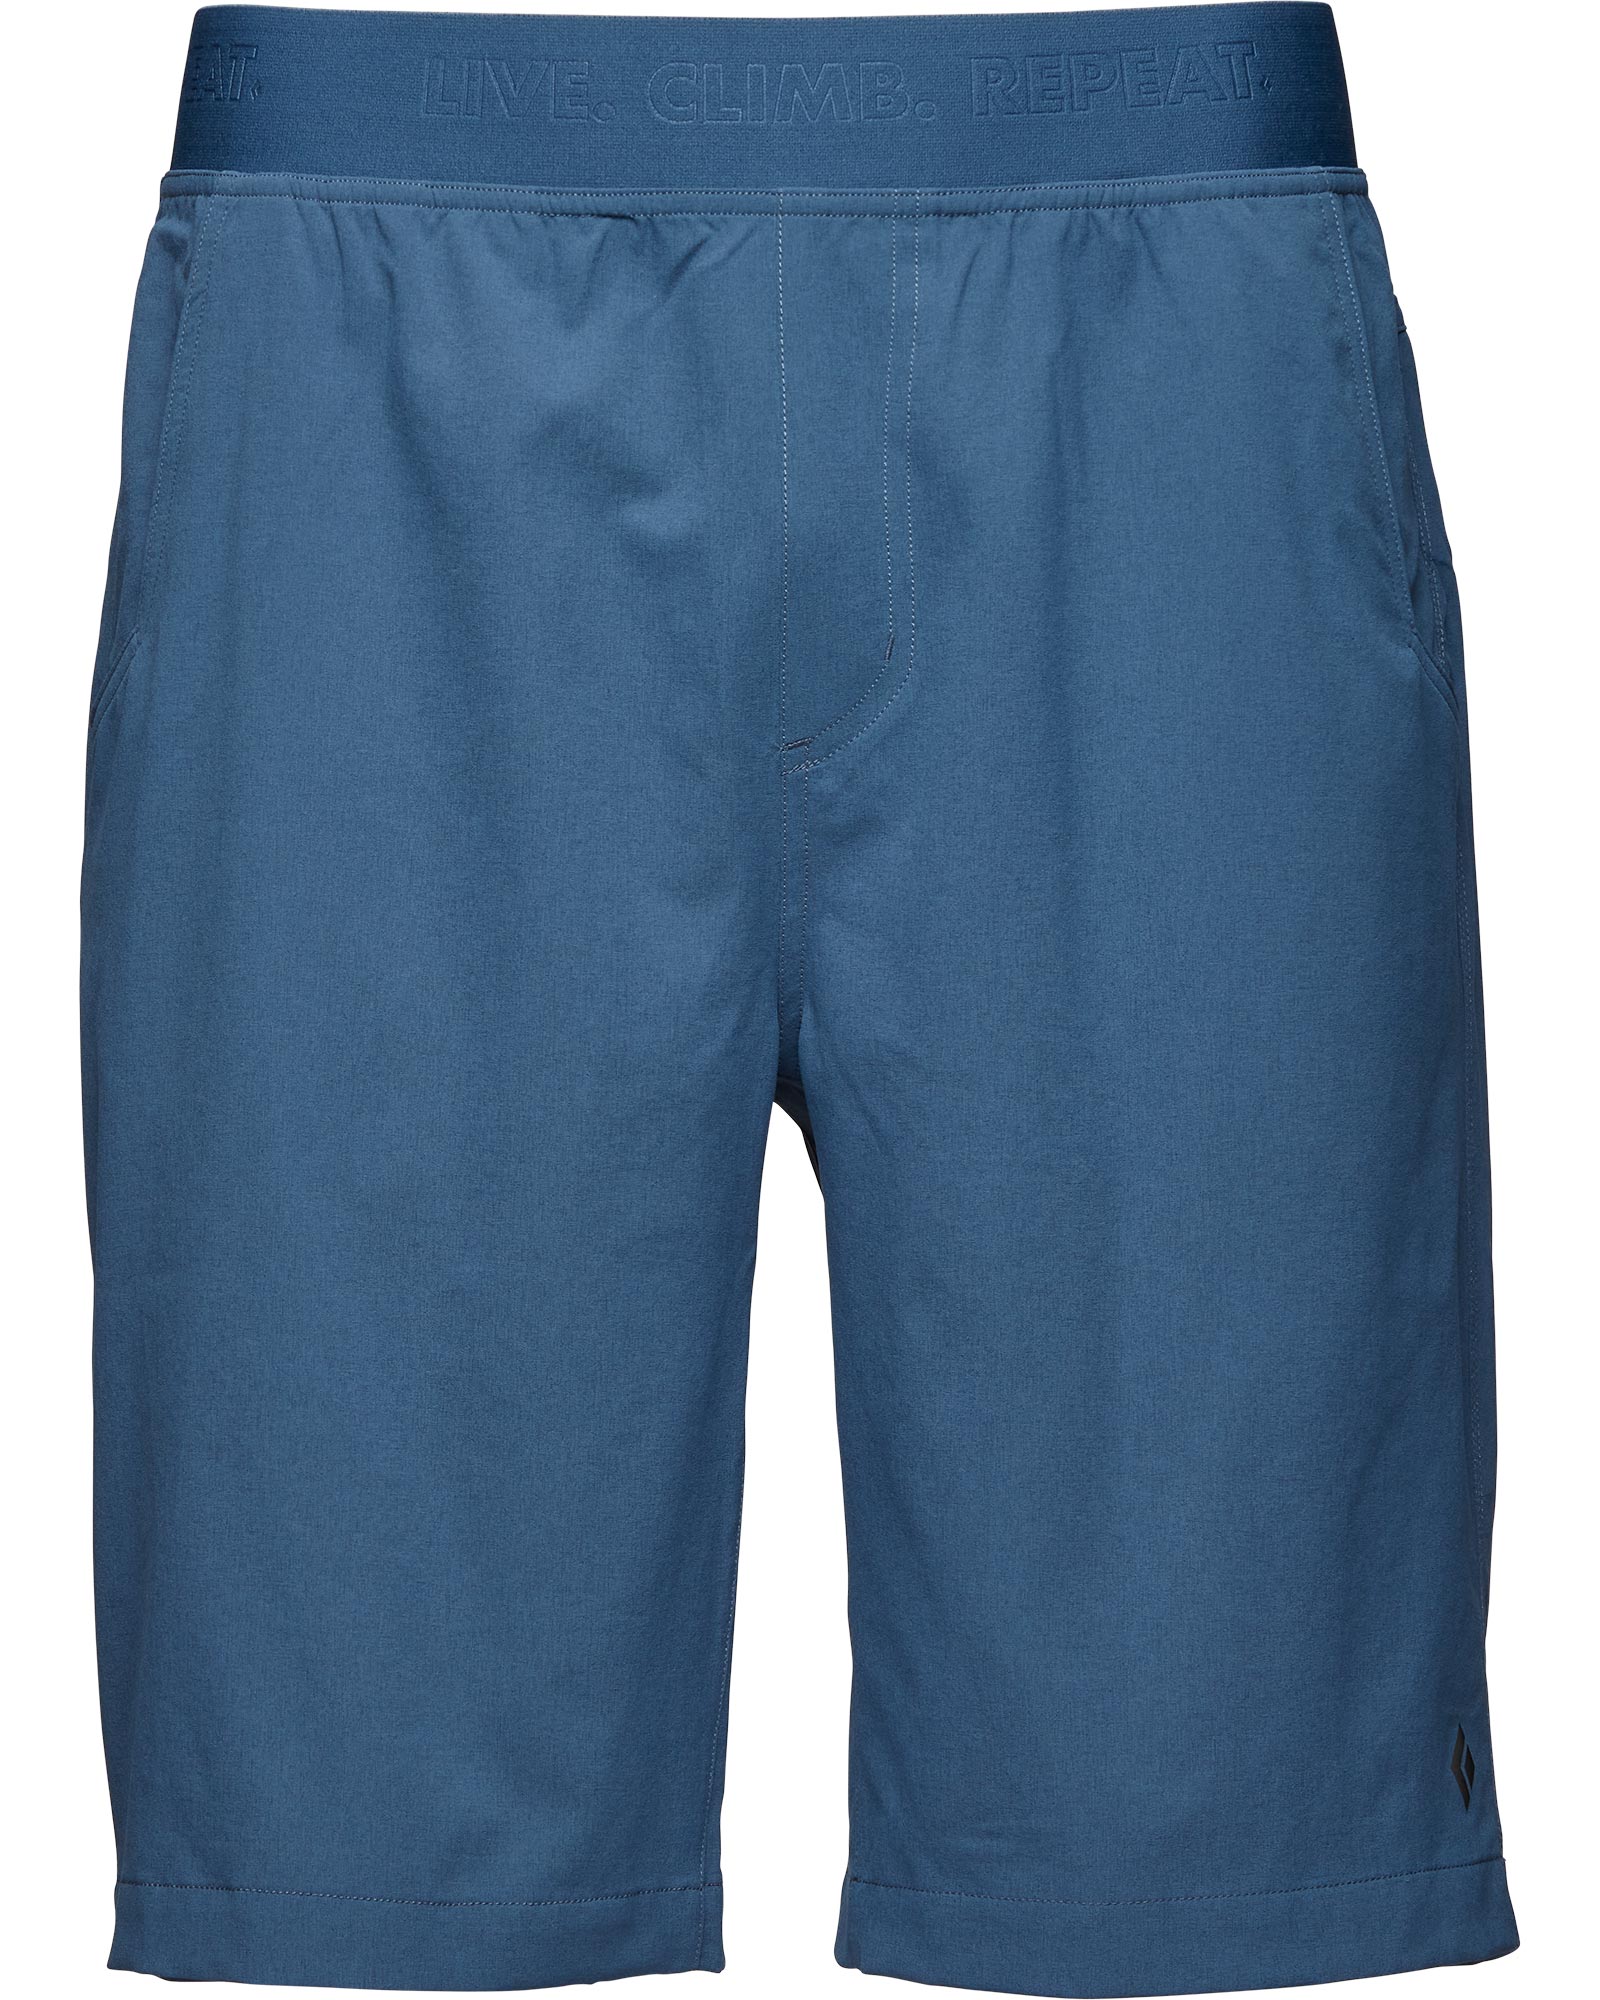 Black Diamond Sierra Men’s Shorts - Ink Blue XL